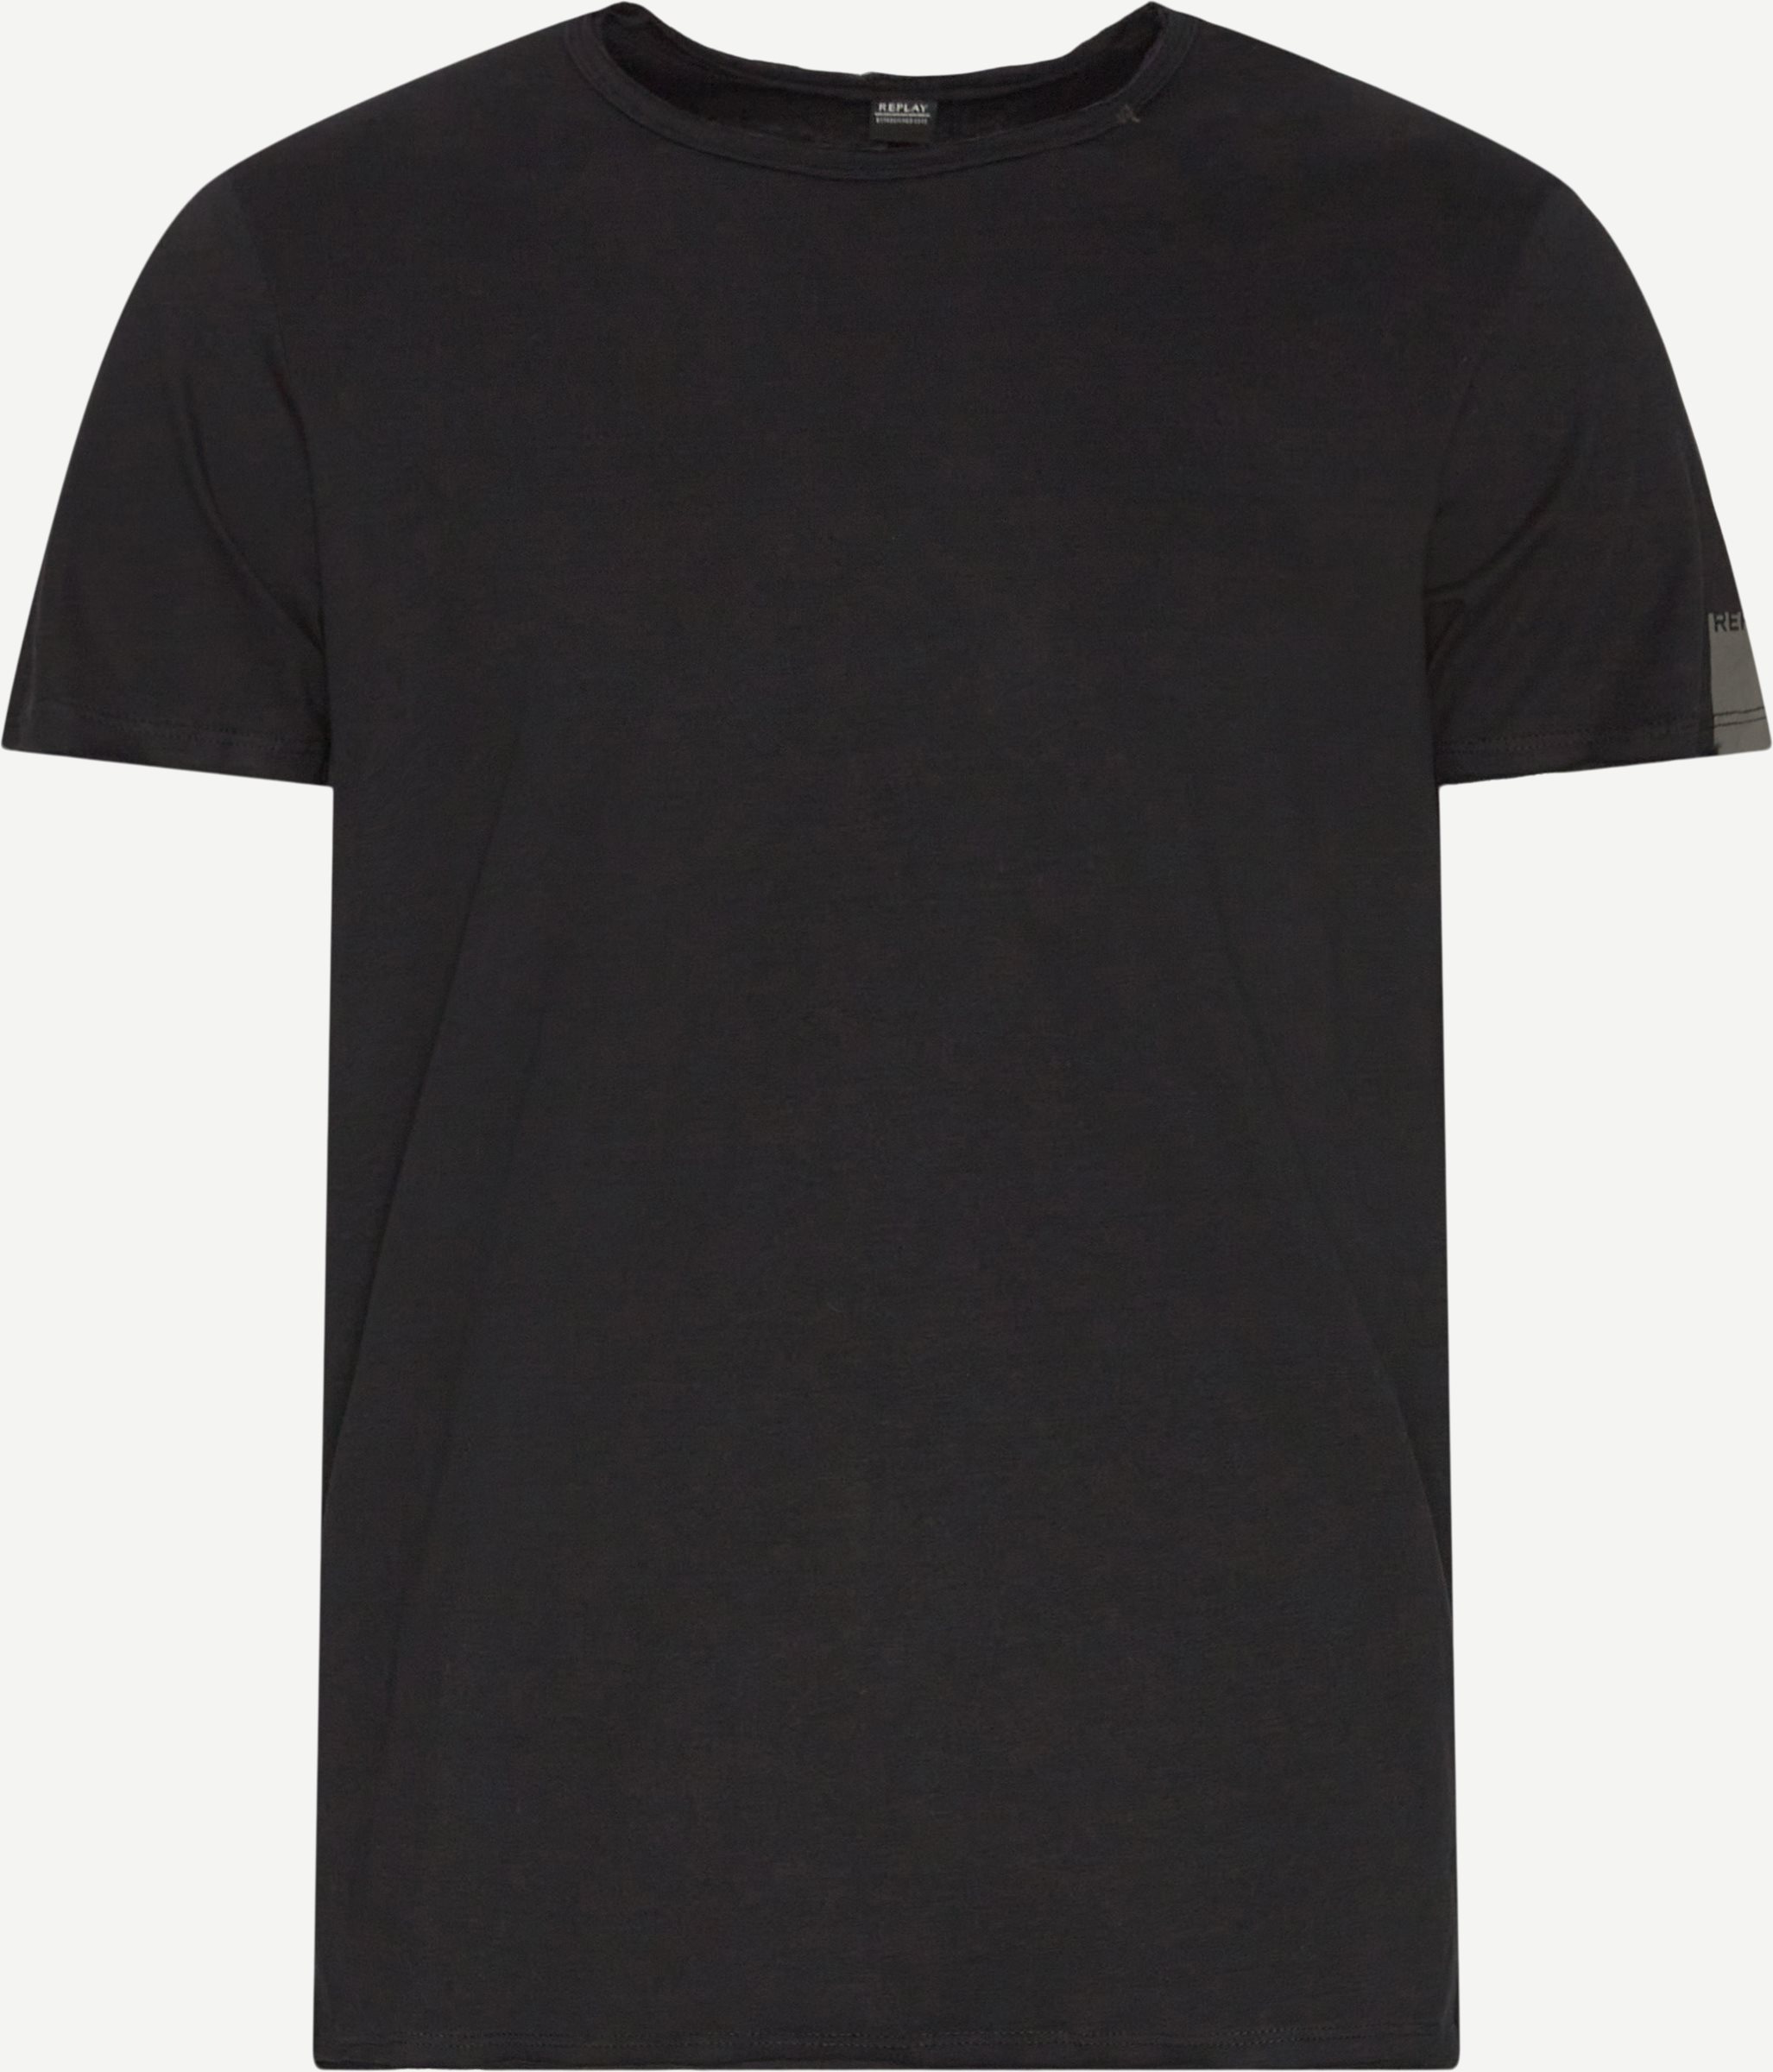 M3590 T-shirt - T-shirts - Regular fit - Sort